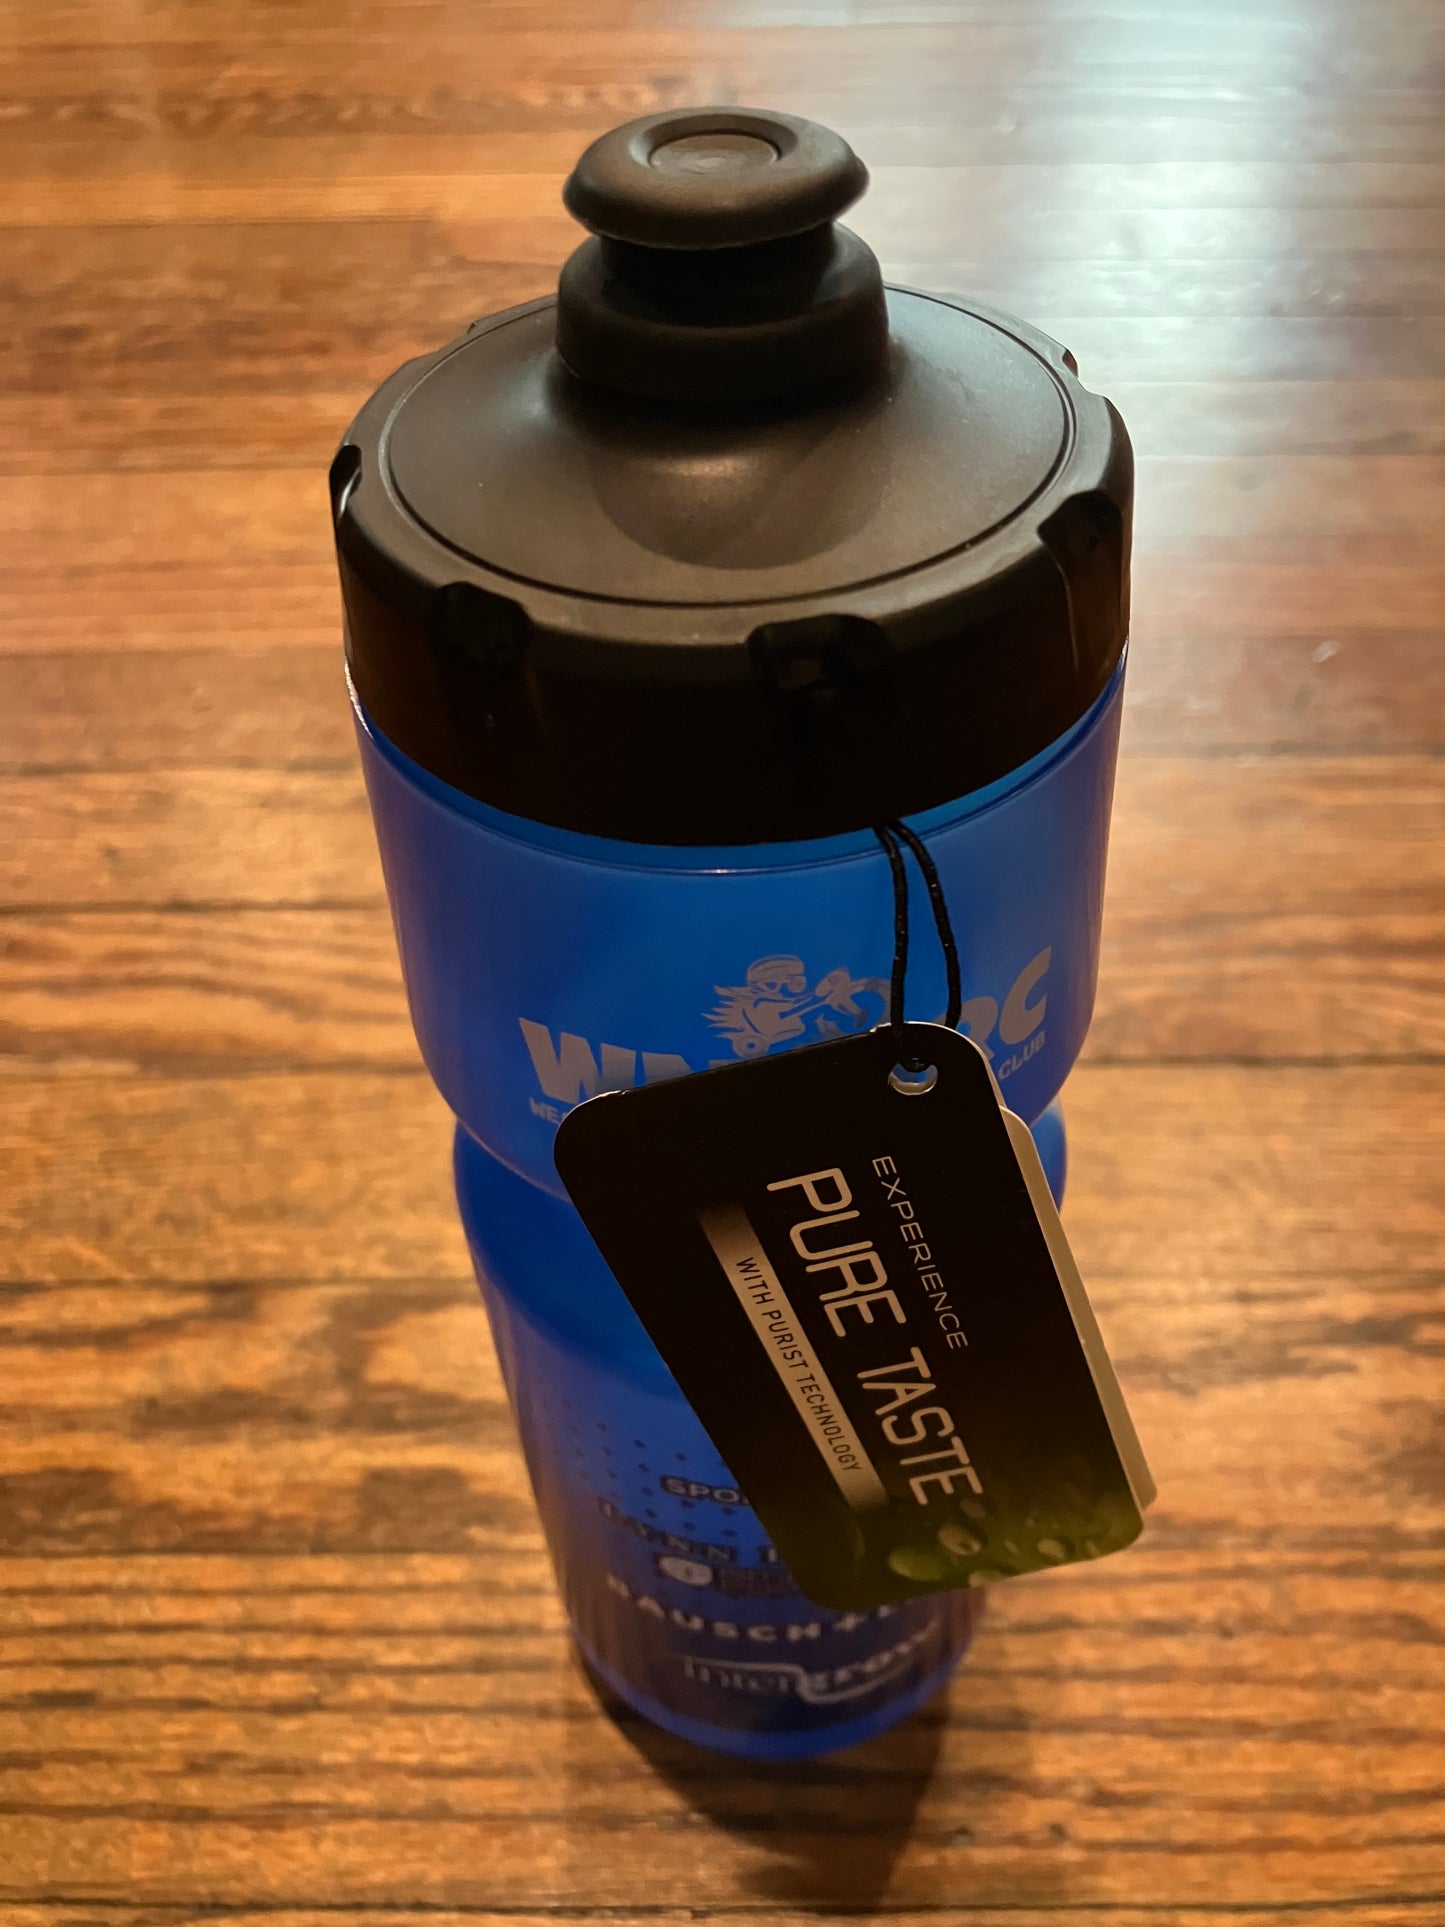 Ide Racing Purist Water Bottle - 26 Ounce